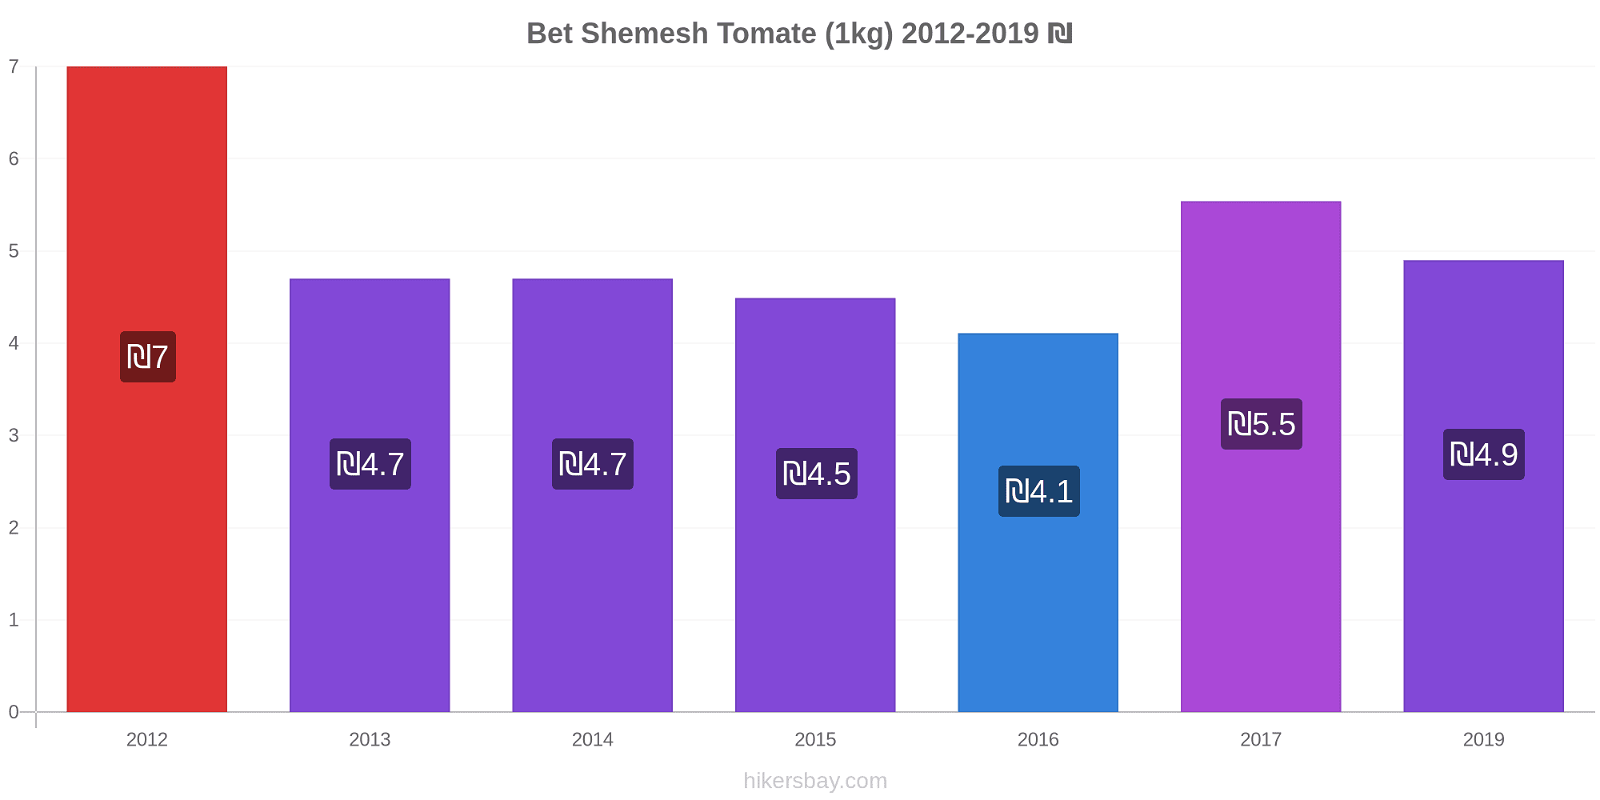 Bet Shemesh changements de prix Tomate (1kg) hikersbay.com